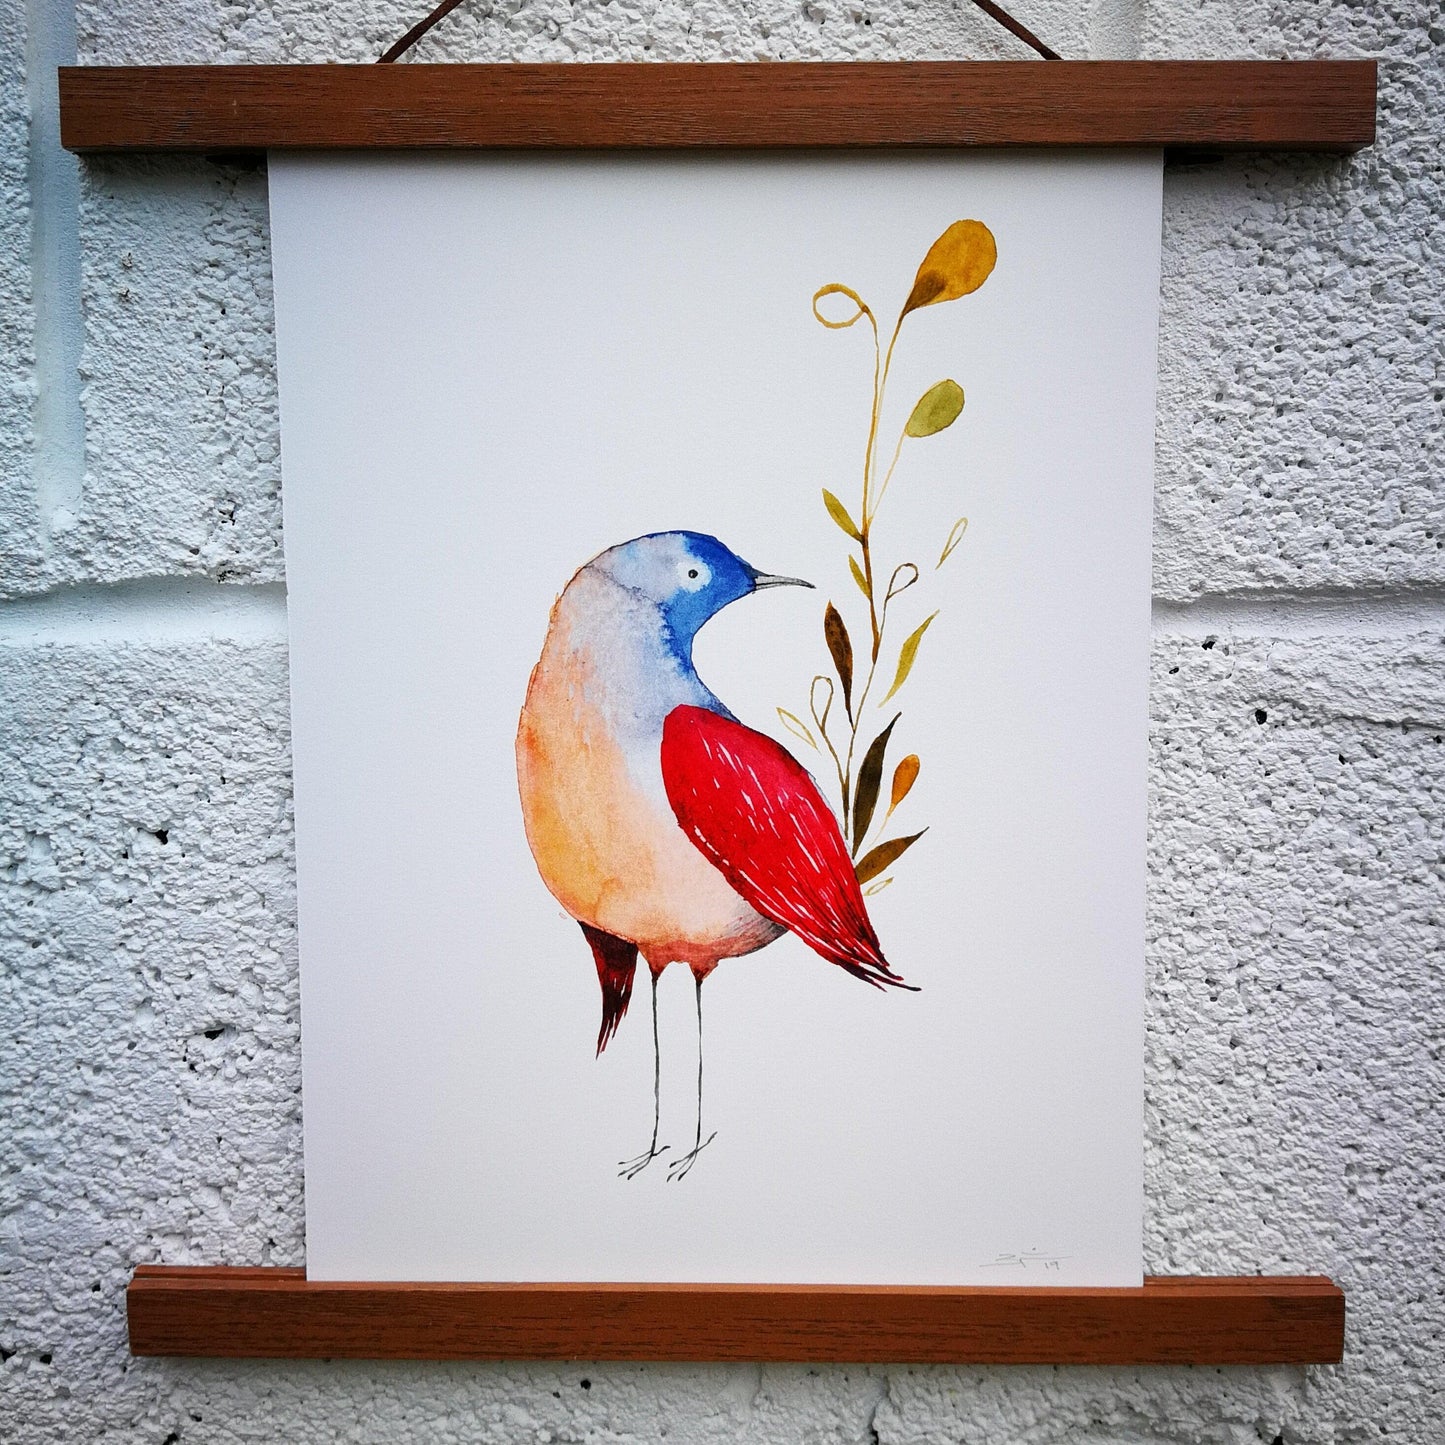 Red Winged Bird A4 Print - Drumgreenagh Craft & Design Store